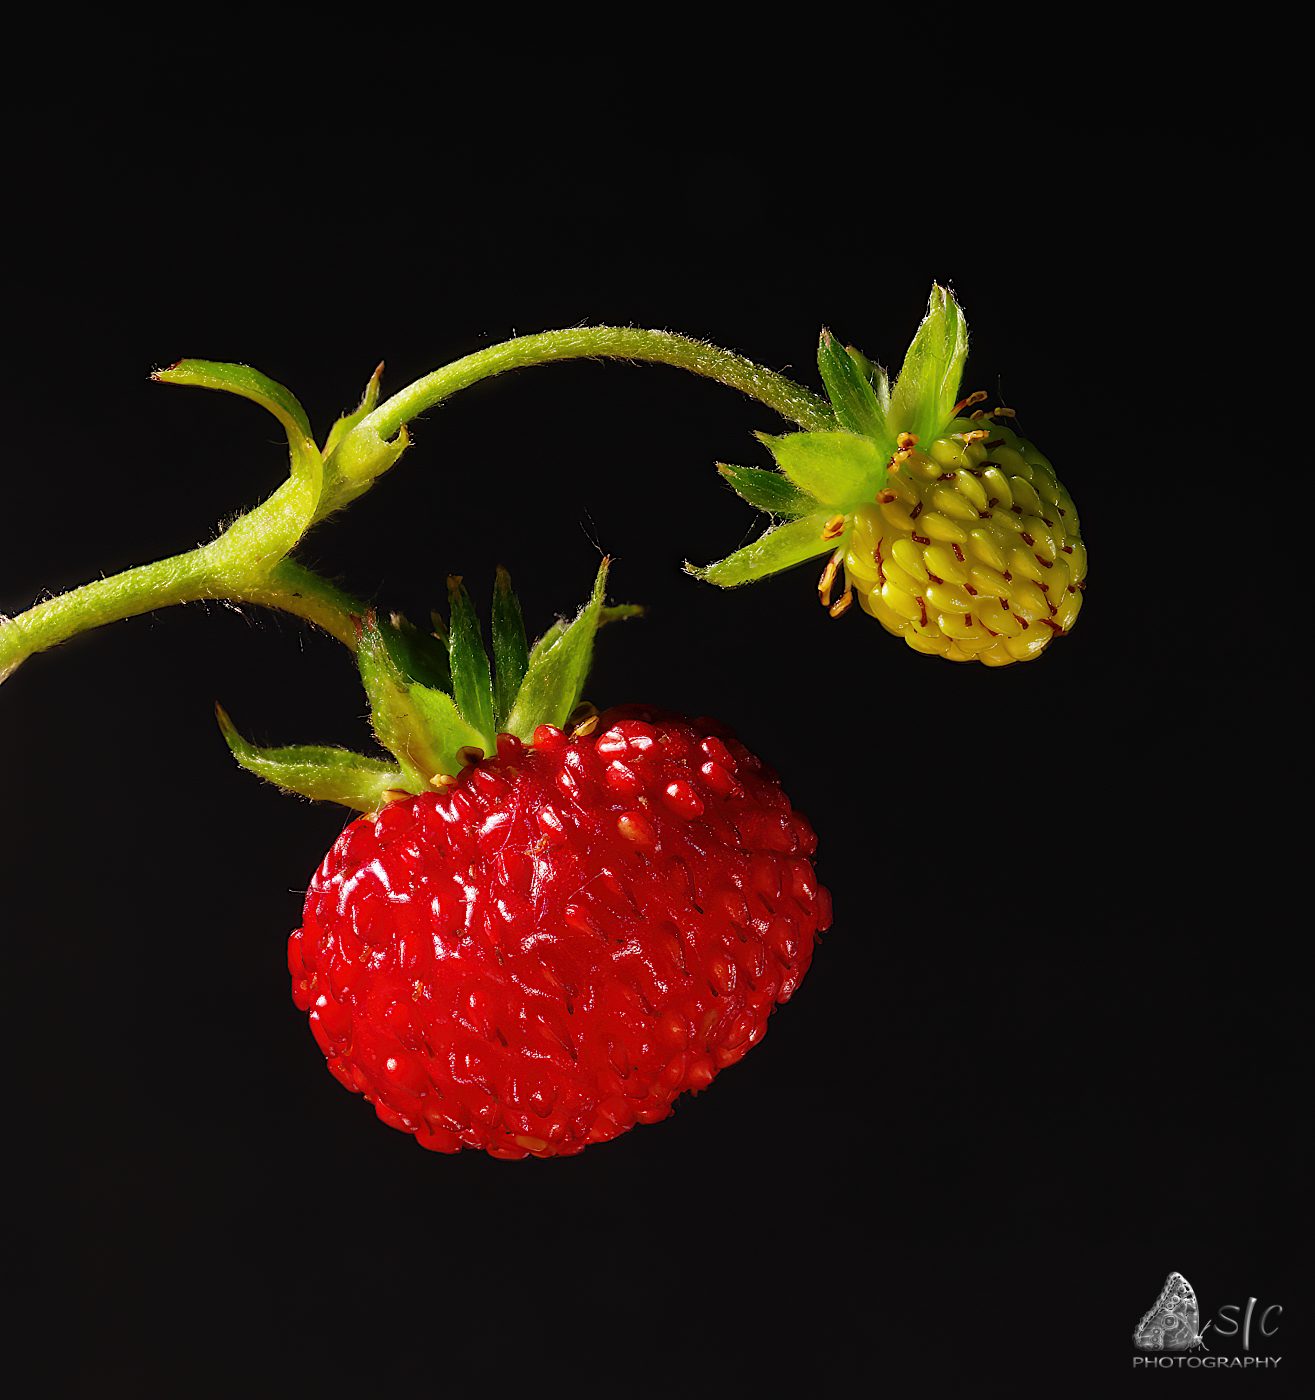 Wild strawberry / woodland strawberry / Alpine strawberry / Carpathian strawberry or European strawberry (Fragaria vesca)